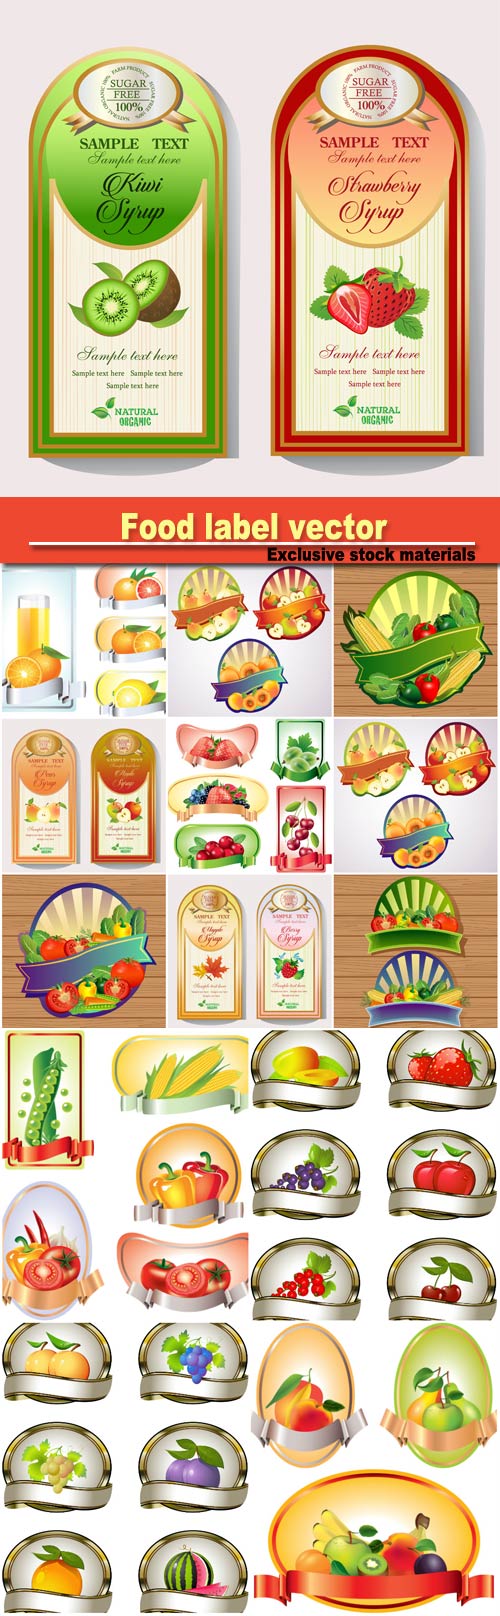 Food label vector, vegetables, berries and fruit